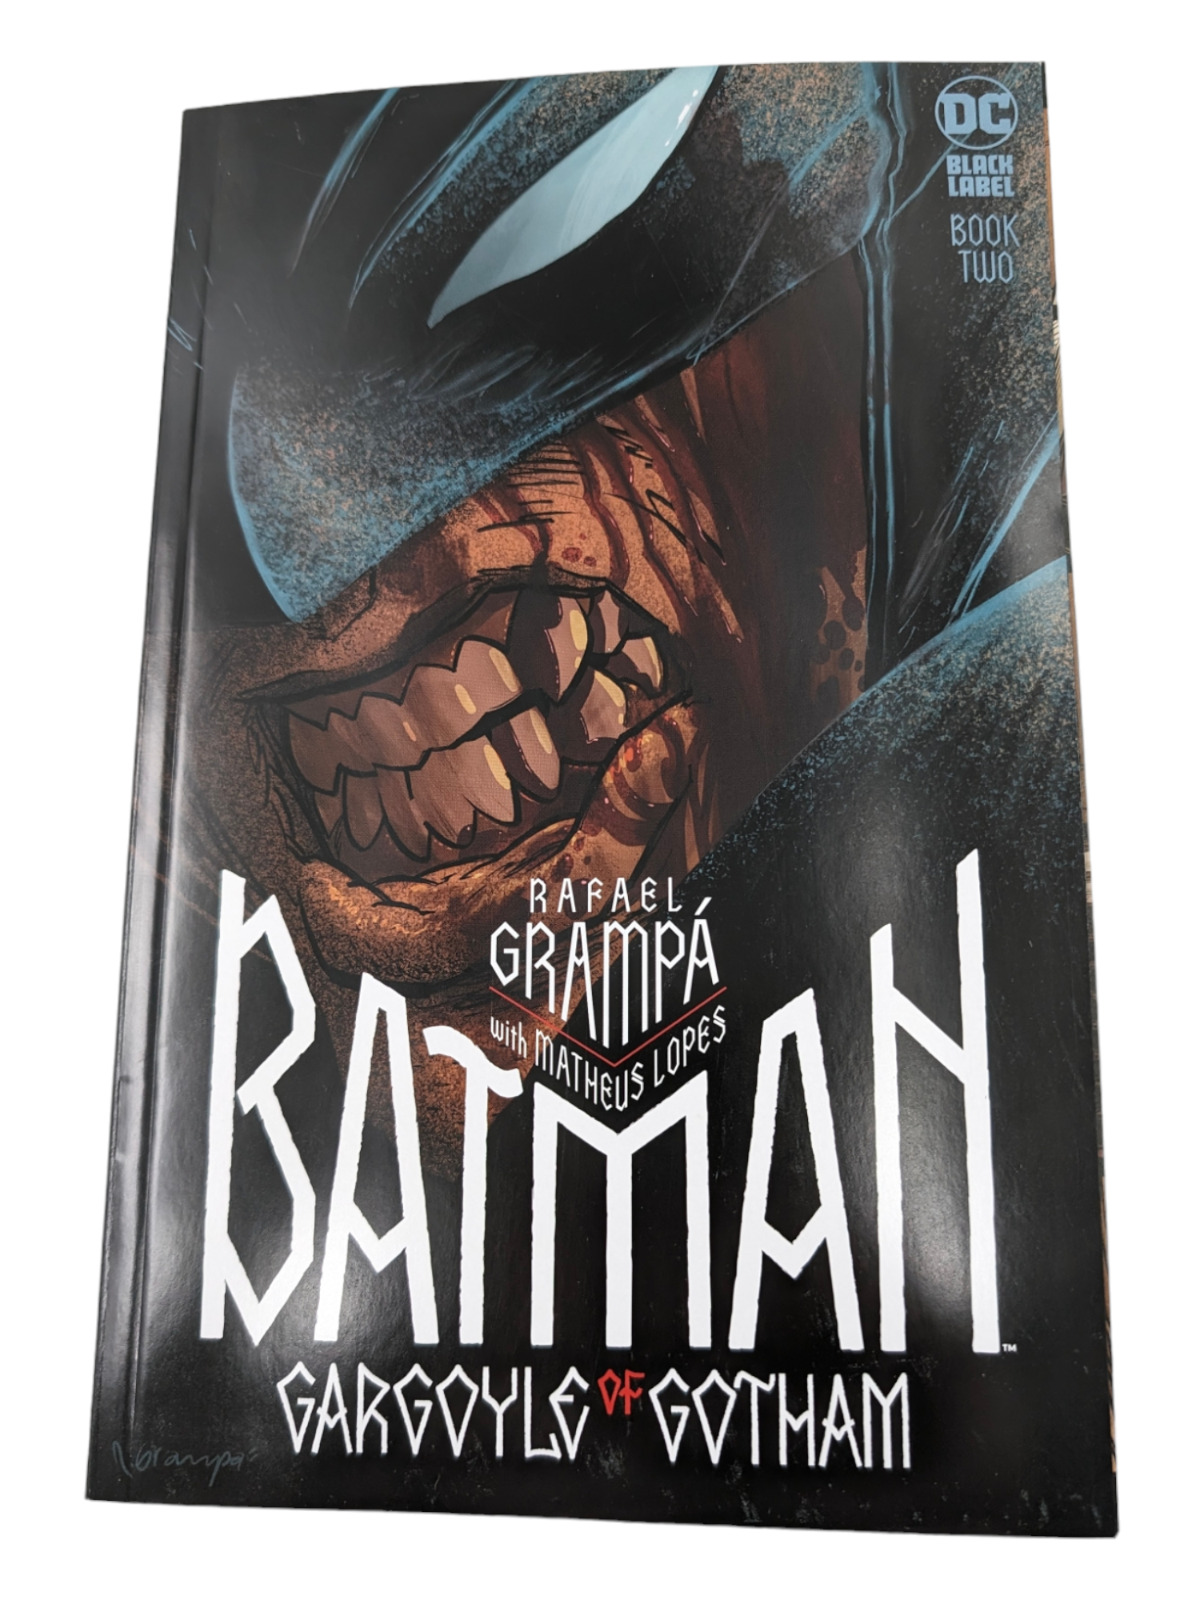 Batman Gargoyle of Gotham #2 1:25 Grassetti Variant Actual Scans